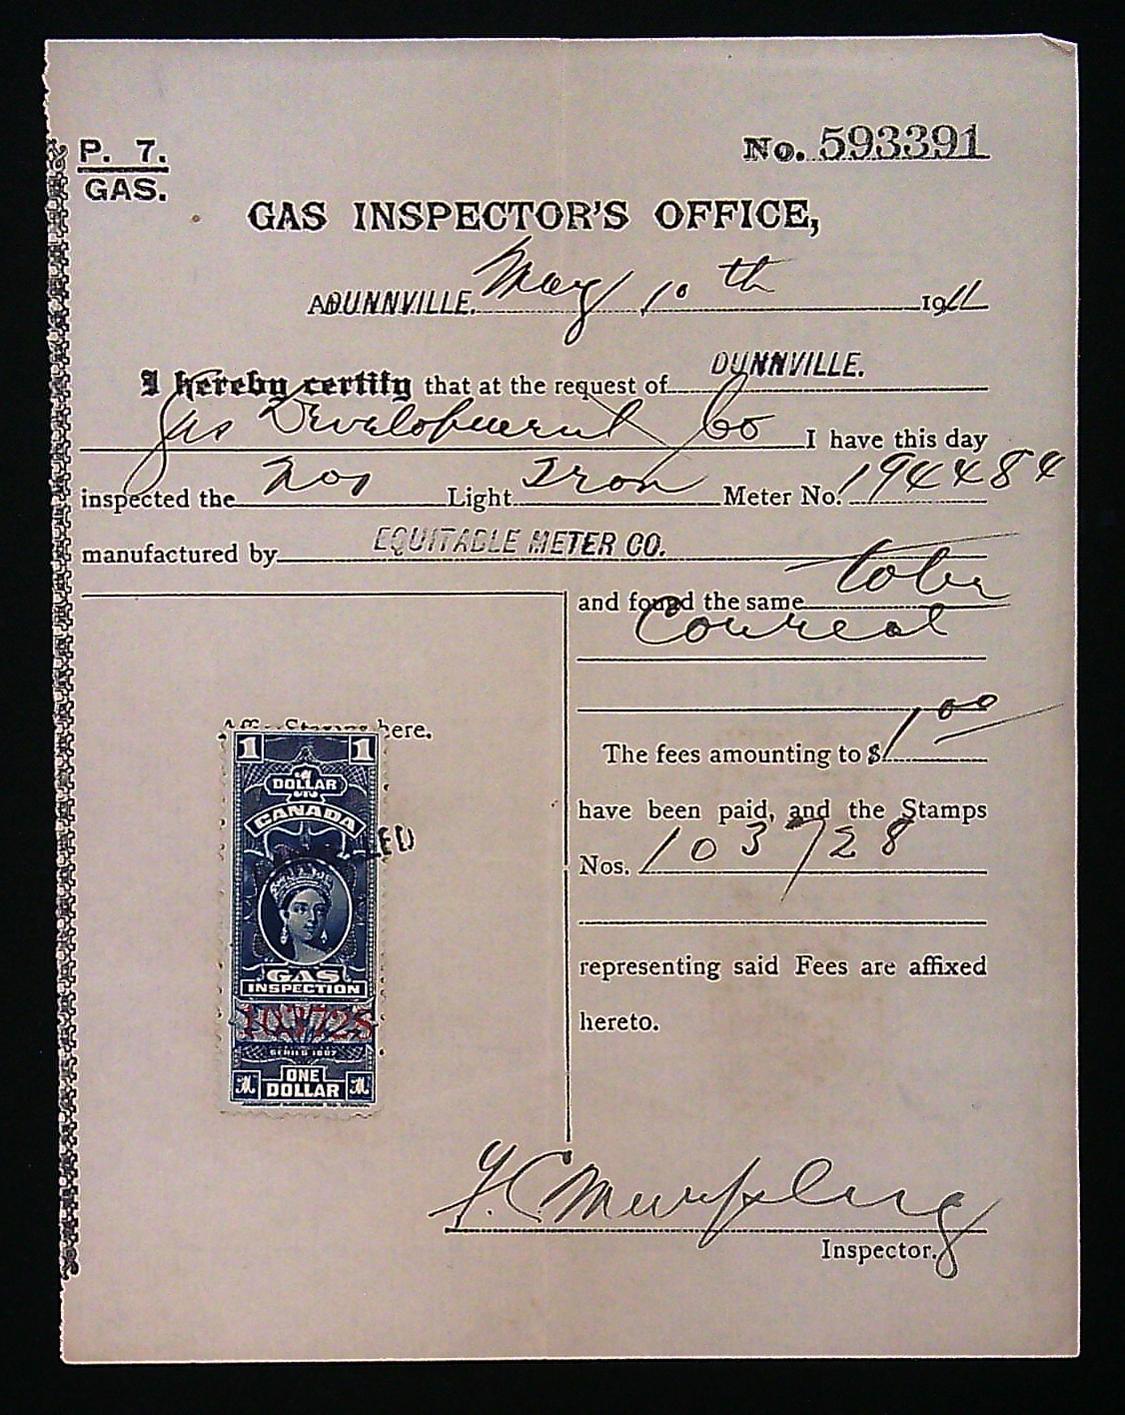 0022FD2107 - FG22 - Gas Inspection Document